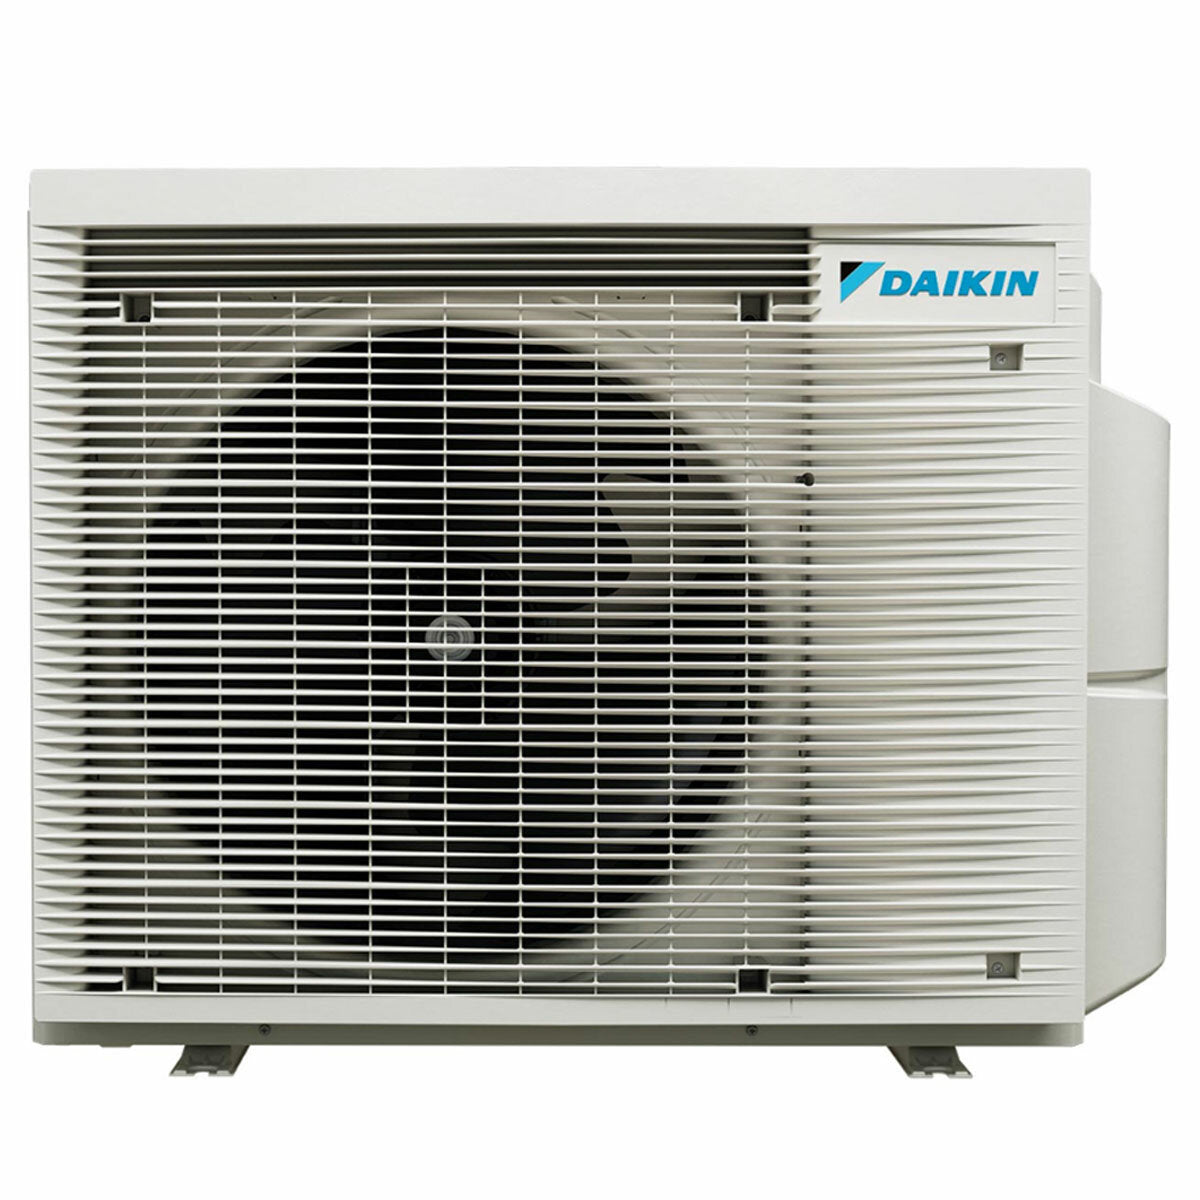 Daikin Mini Sky FDXM-F9 ducted air conditioner trial split 9000+9000+18000 BTU inverter A++ external 6.8 kW